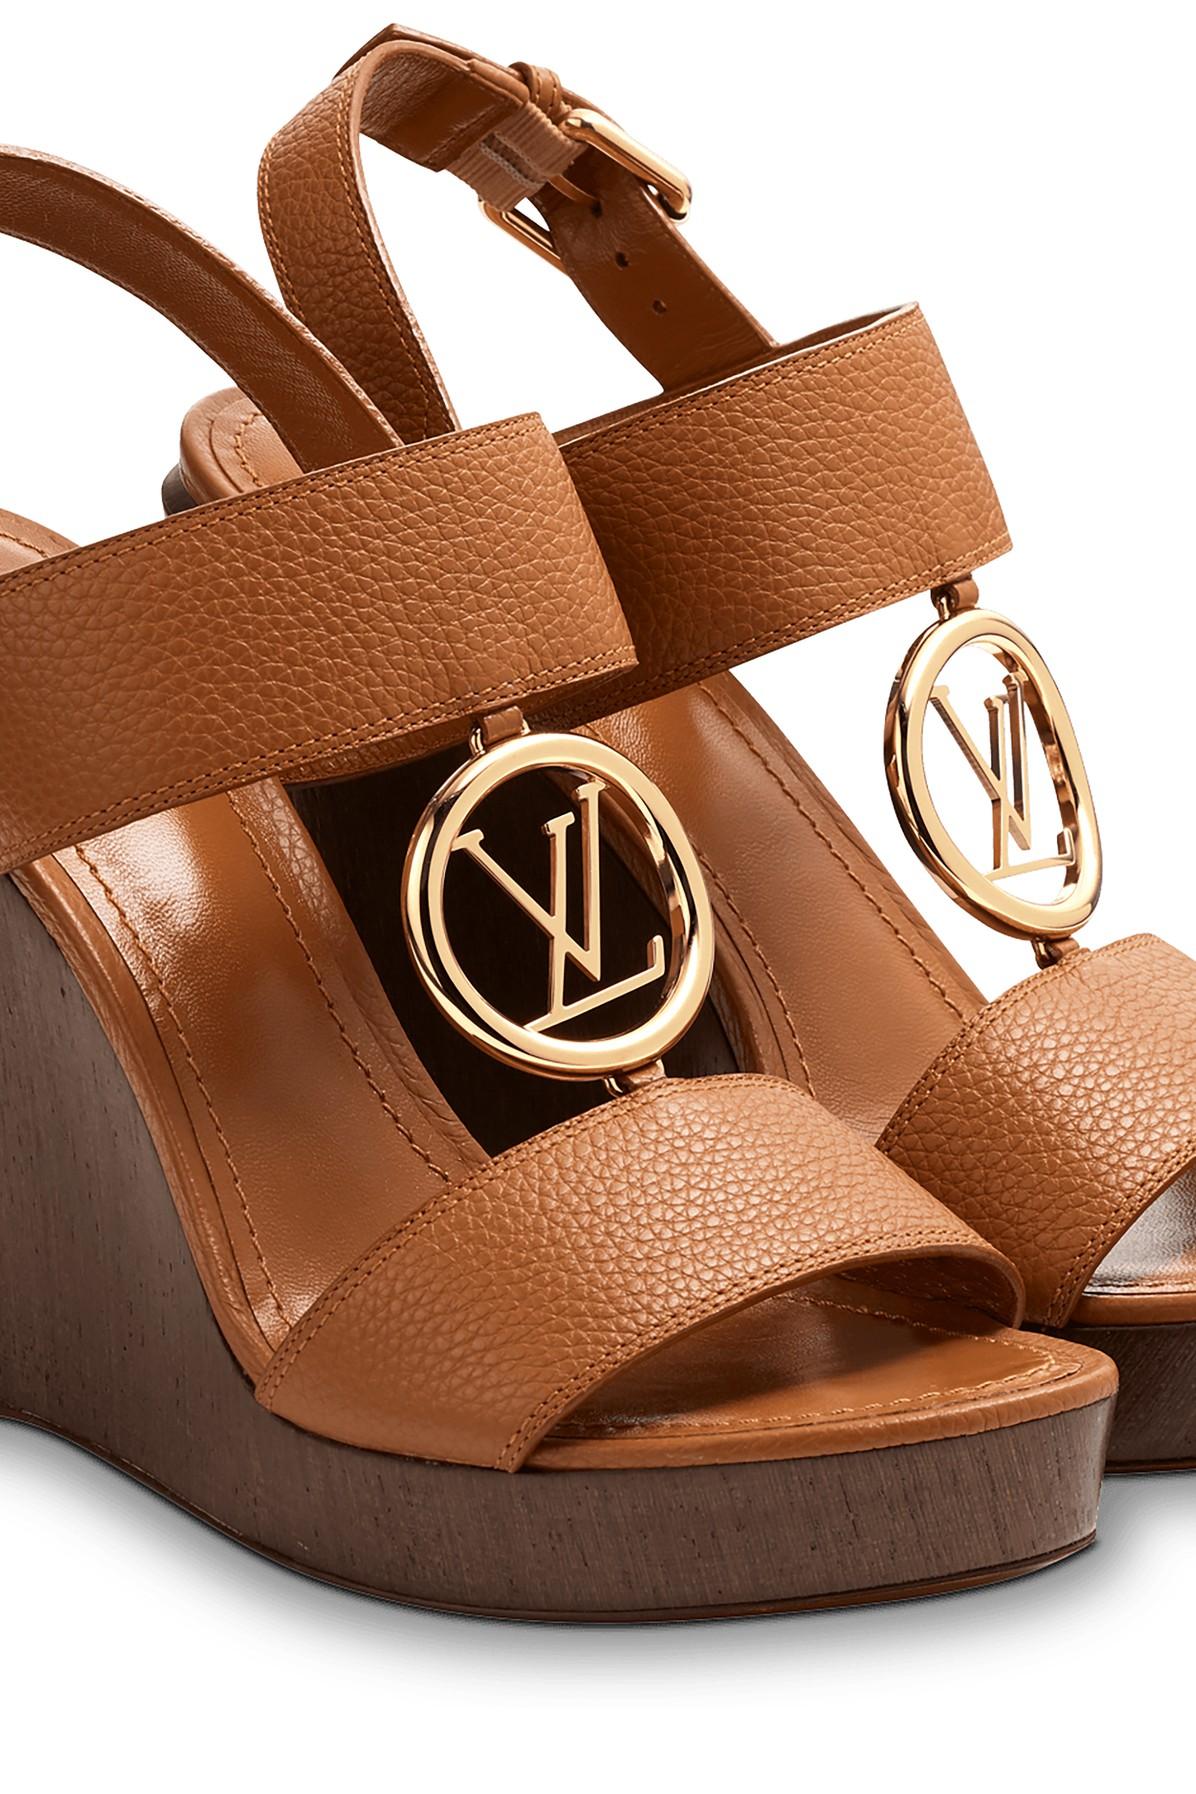 Louis Vuitton Logo Wedge Sandals - Farfetch